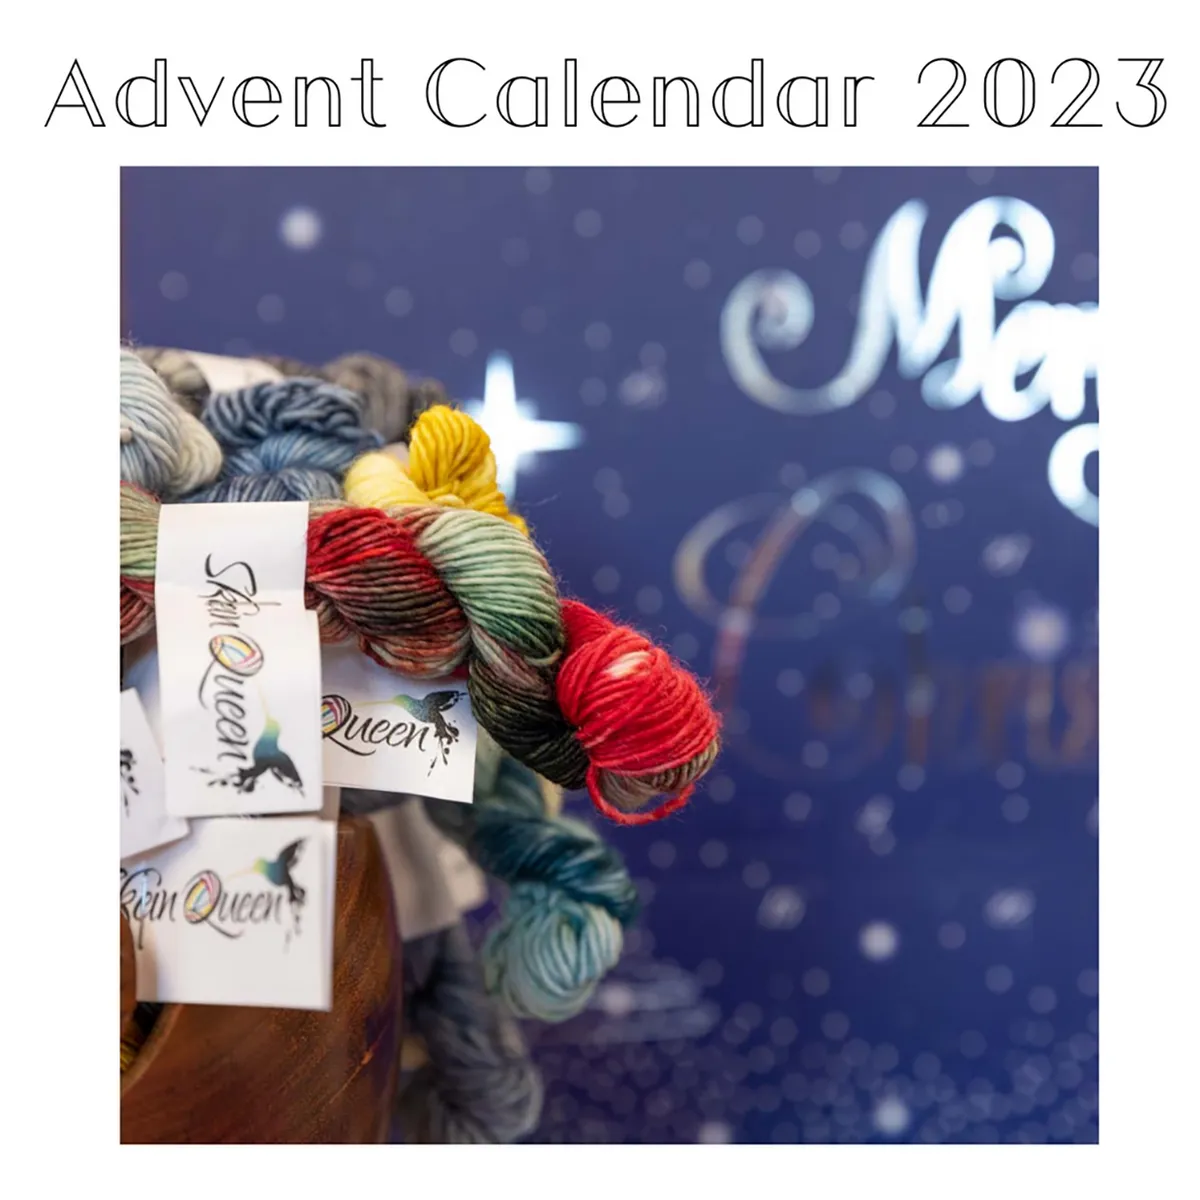 Skein Queen yarn advent calendar